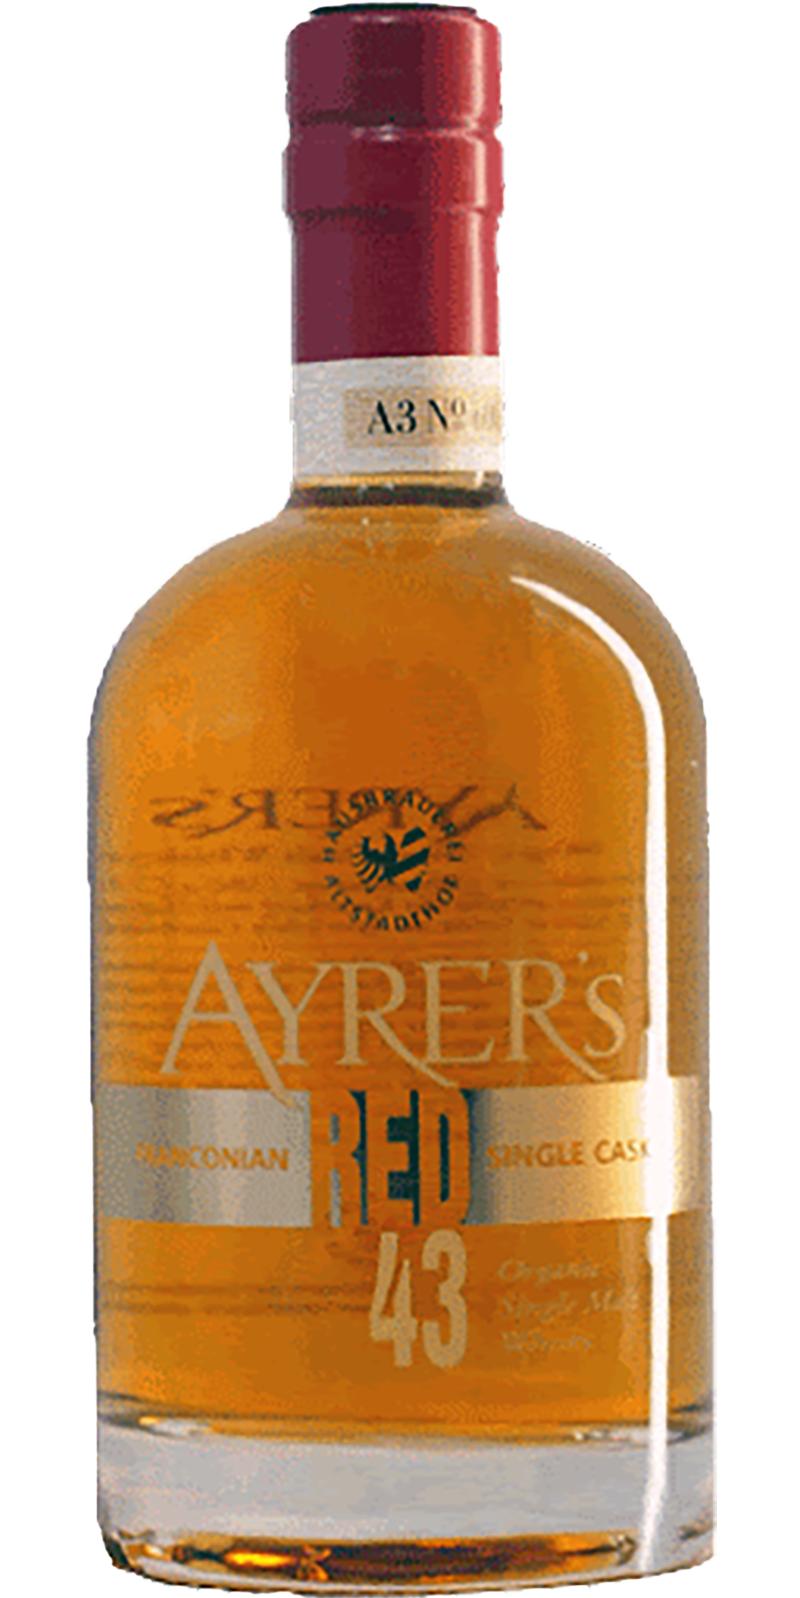 Ayrer's 2009 Ayrer's Red 43 A12 43% 700ml